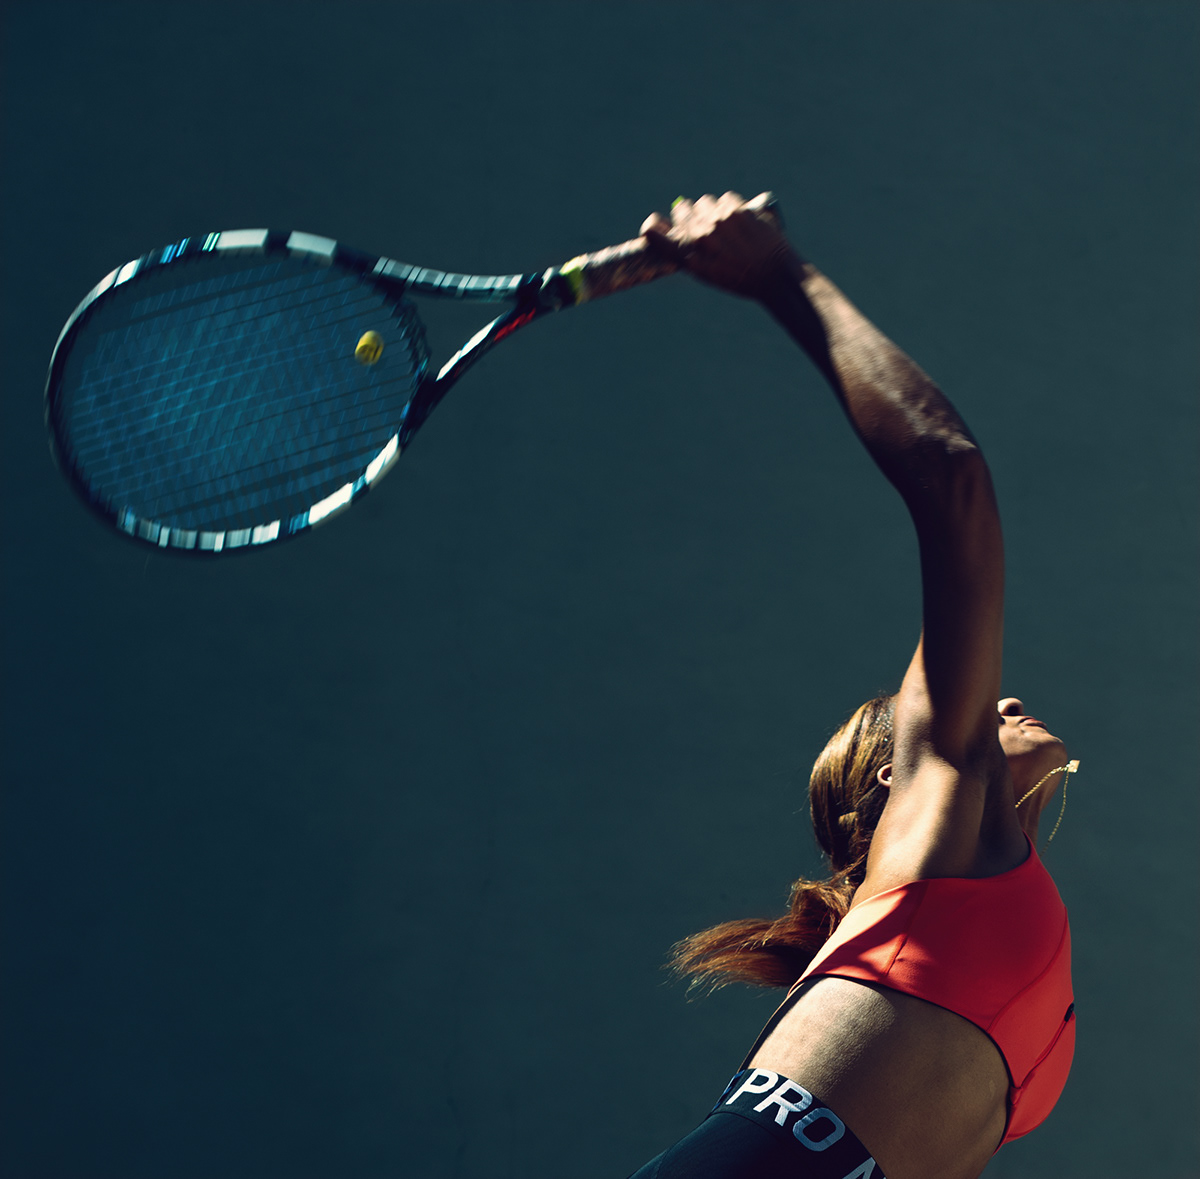 airmax fitness Health nikesportswear Pharmaceutical sport tennis tennis player tennis racket wilson sports